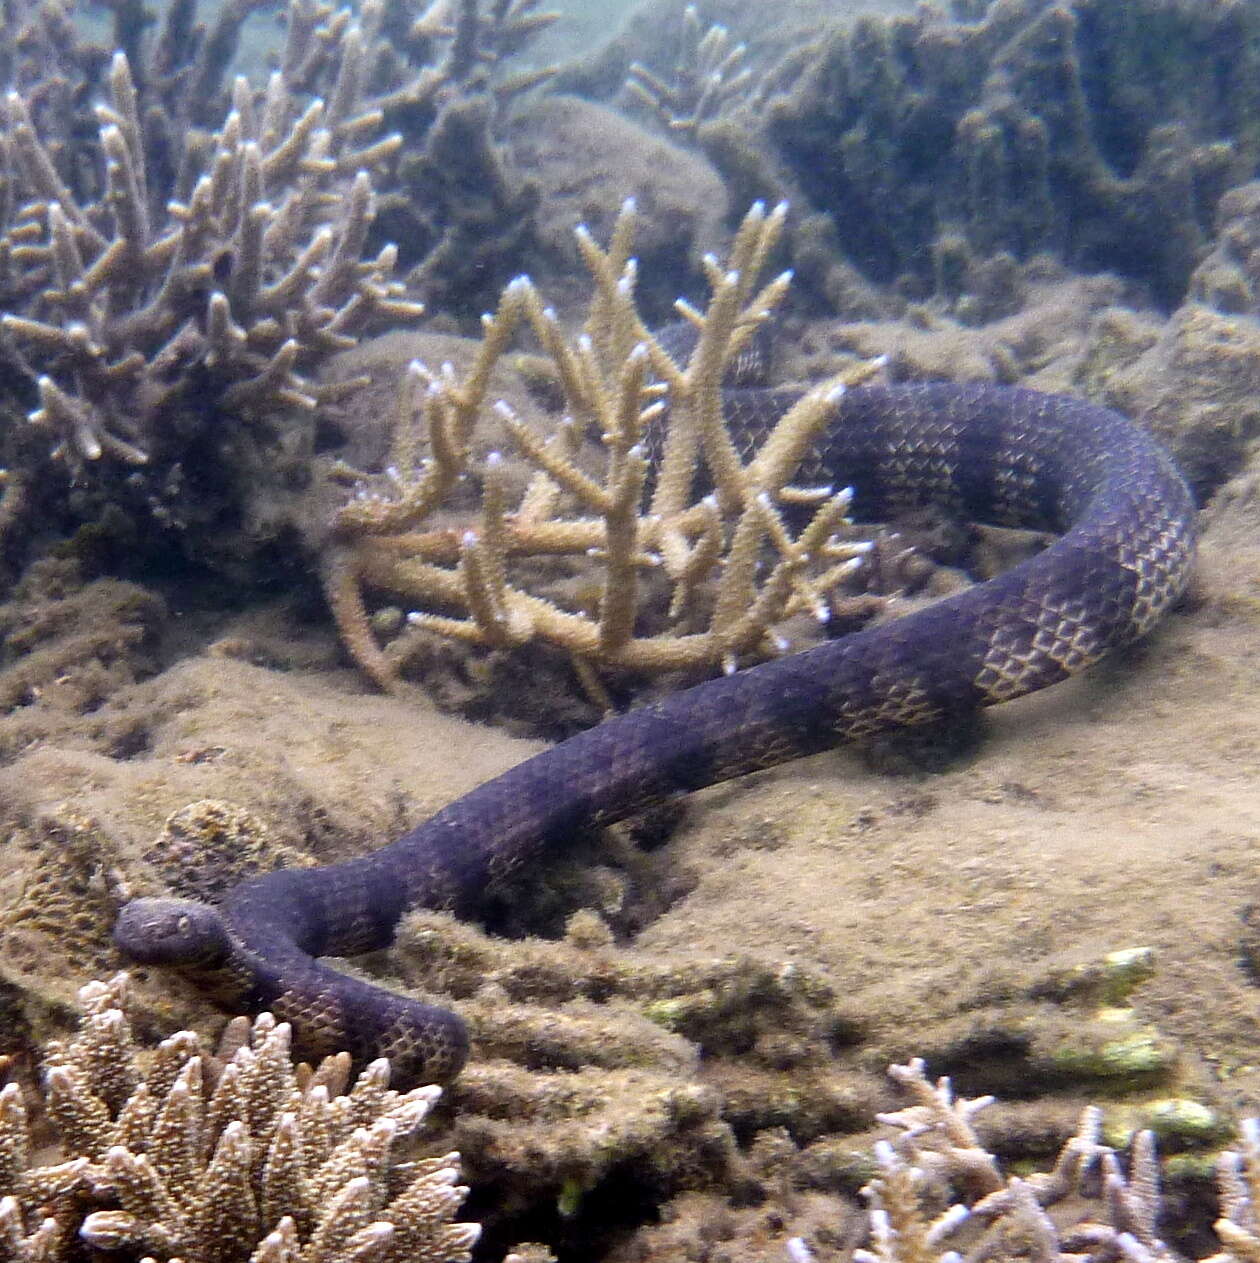 Image of Reef shallows seasnake